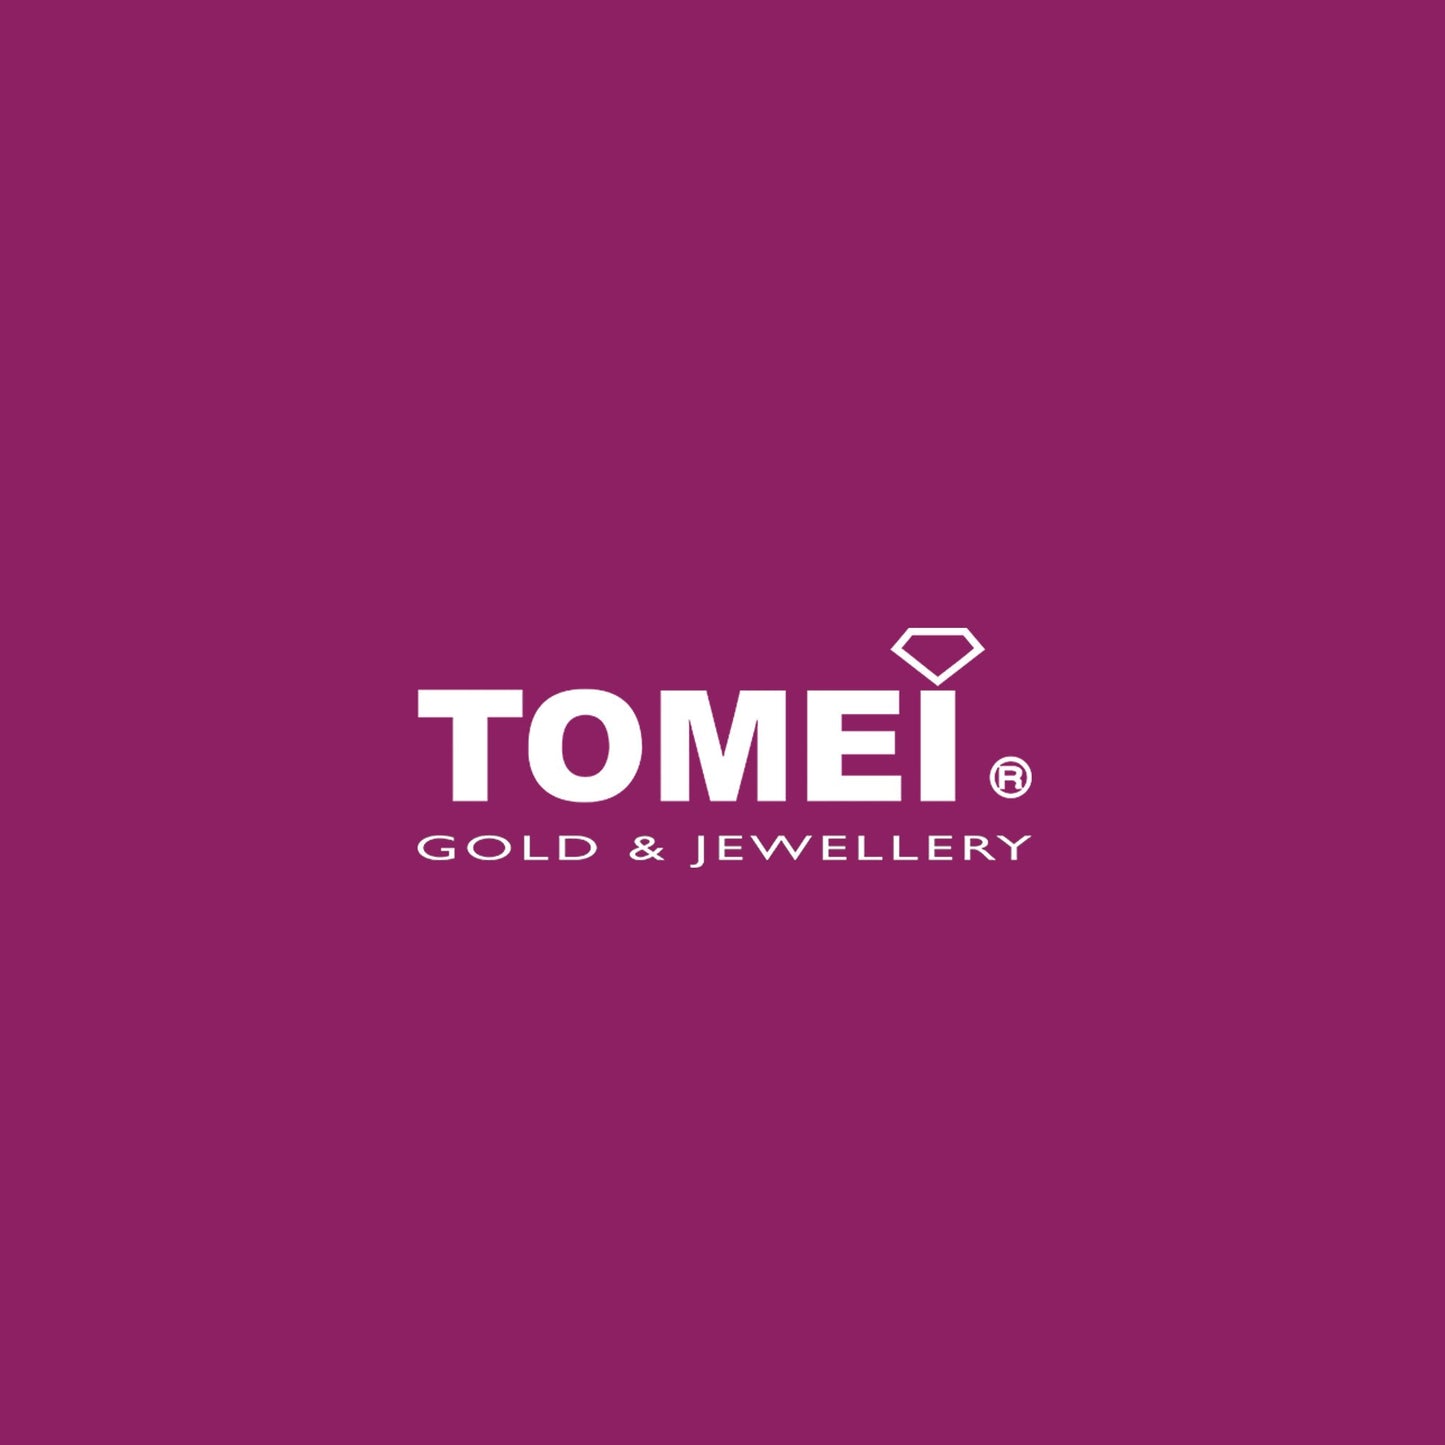 TOMEI Noble Unity Earrings, White Gold 585 (E2167)